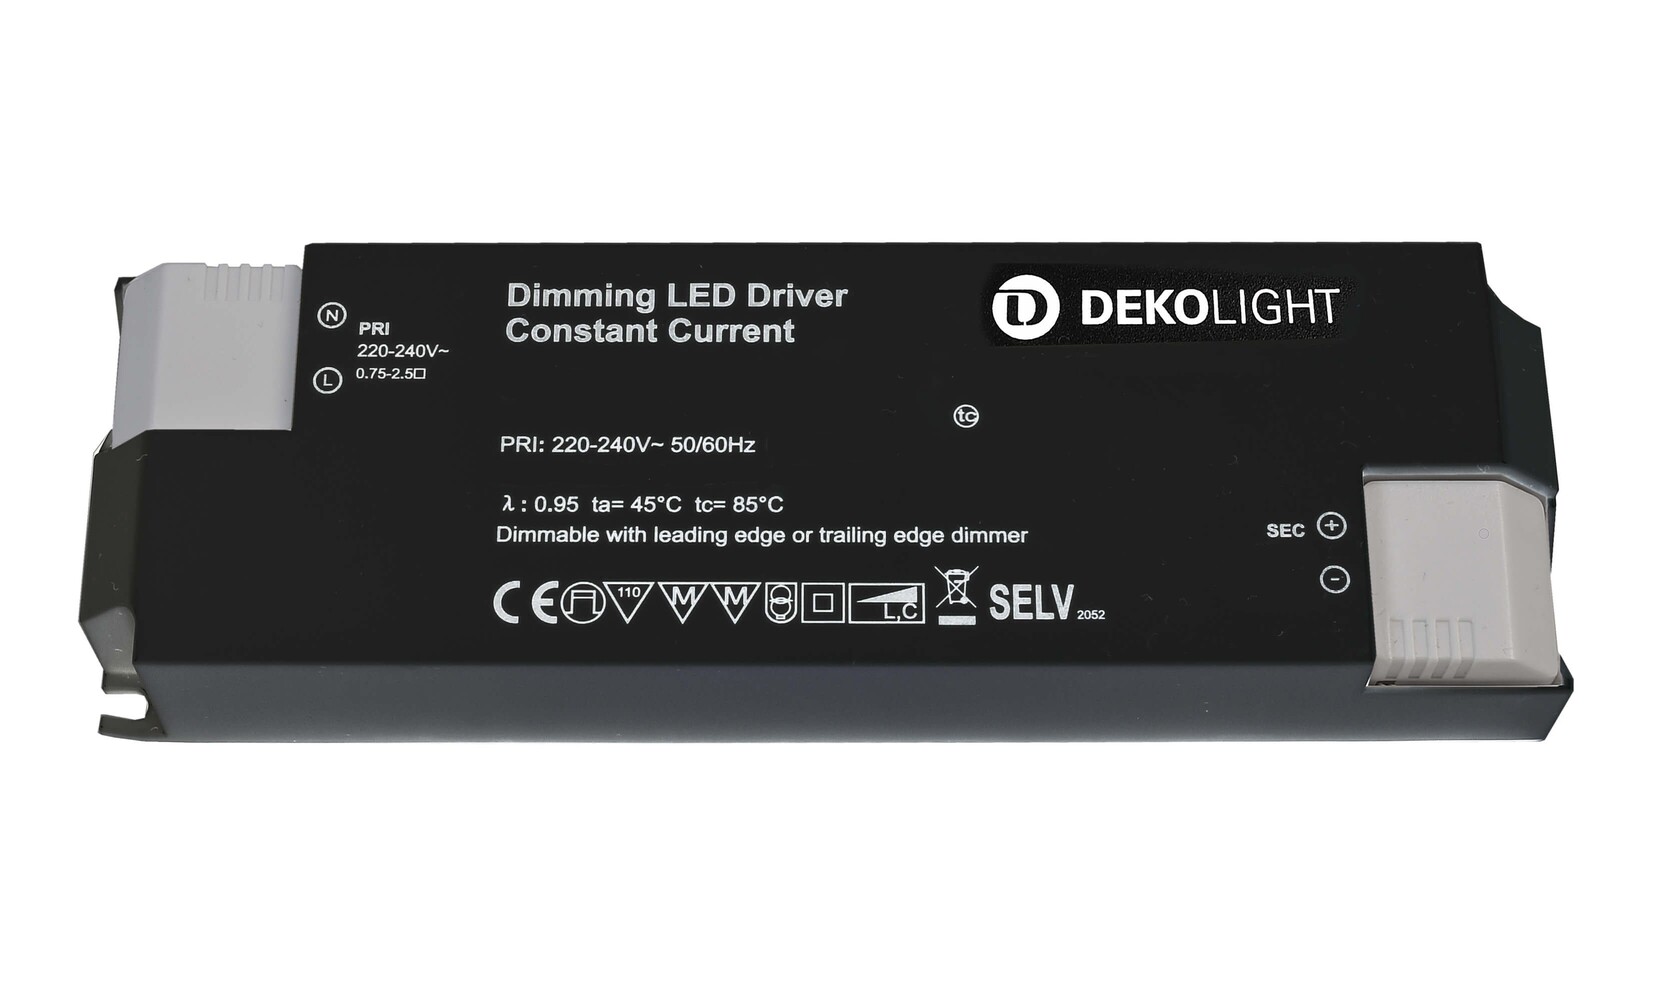 Stromkonstantes LED Netzgerät von der Marke Deko-Light